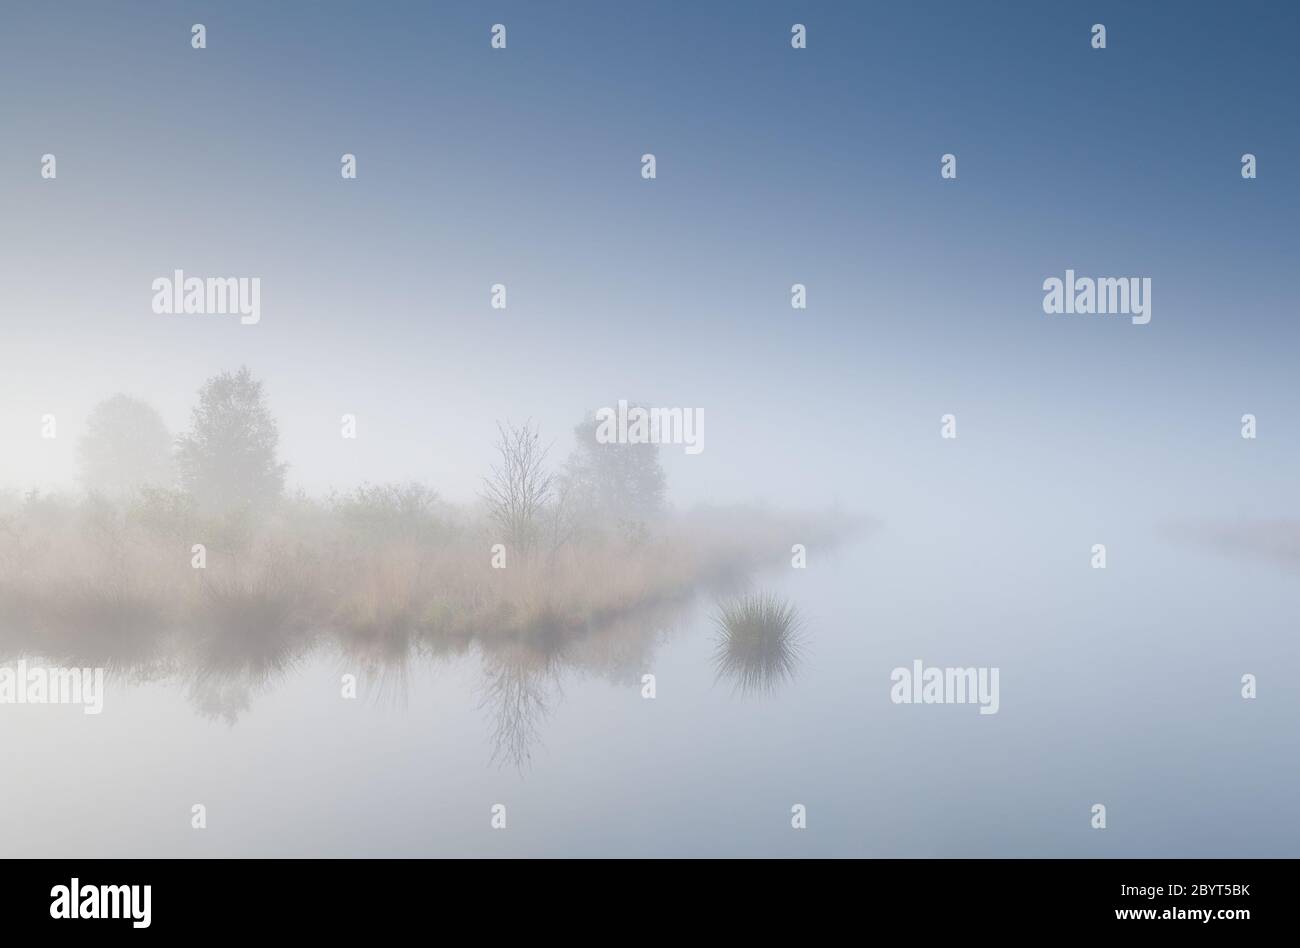 tree island on lake in dense fog Stock Photo